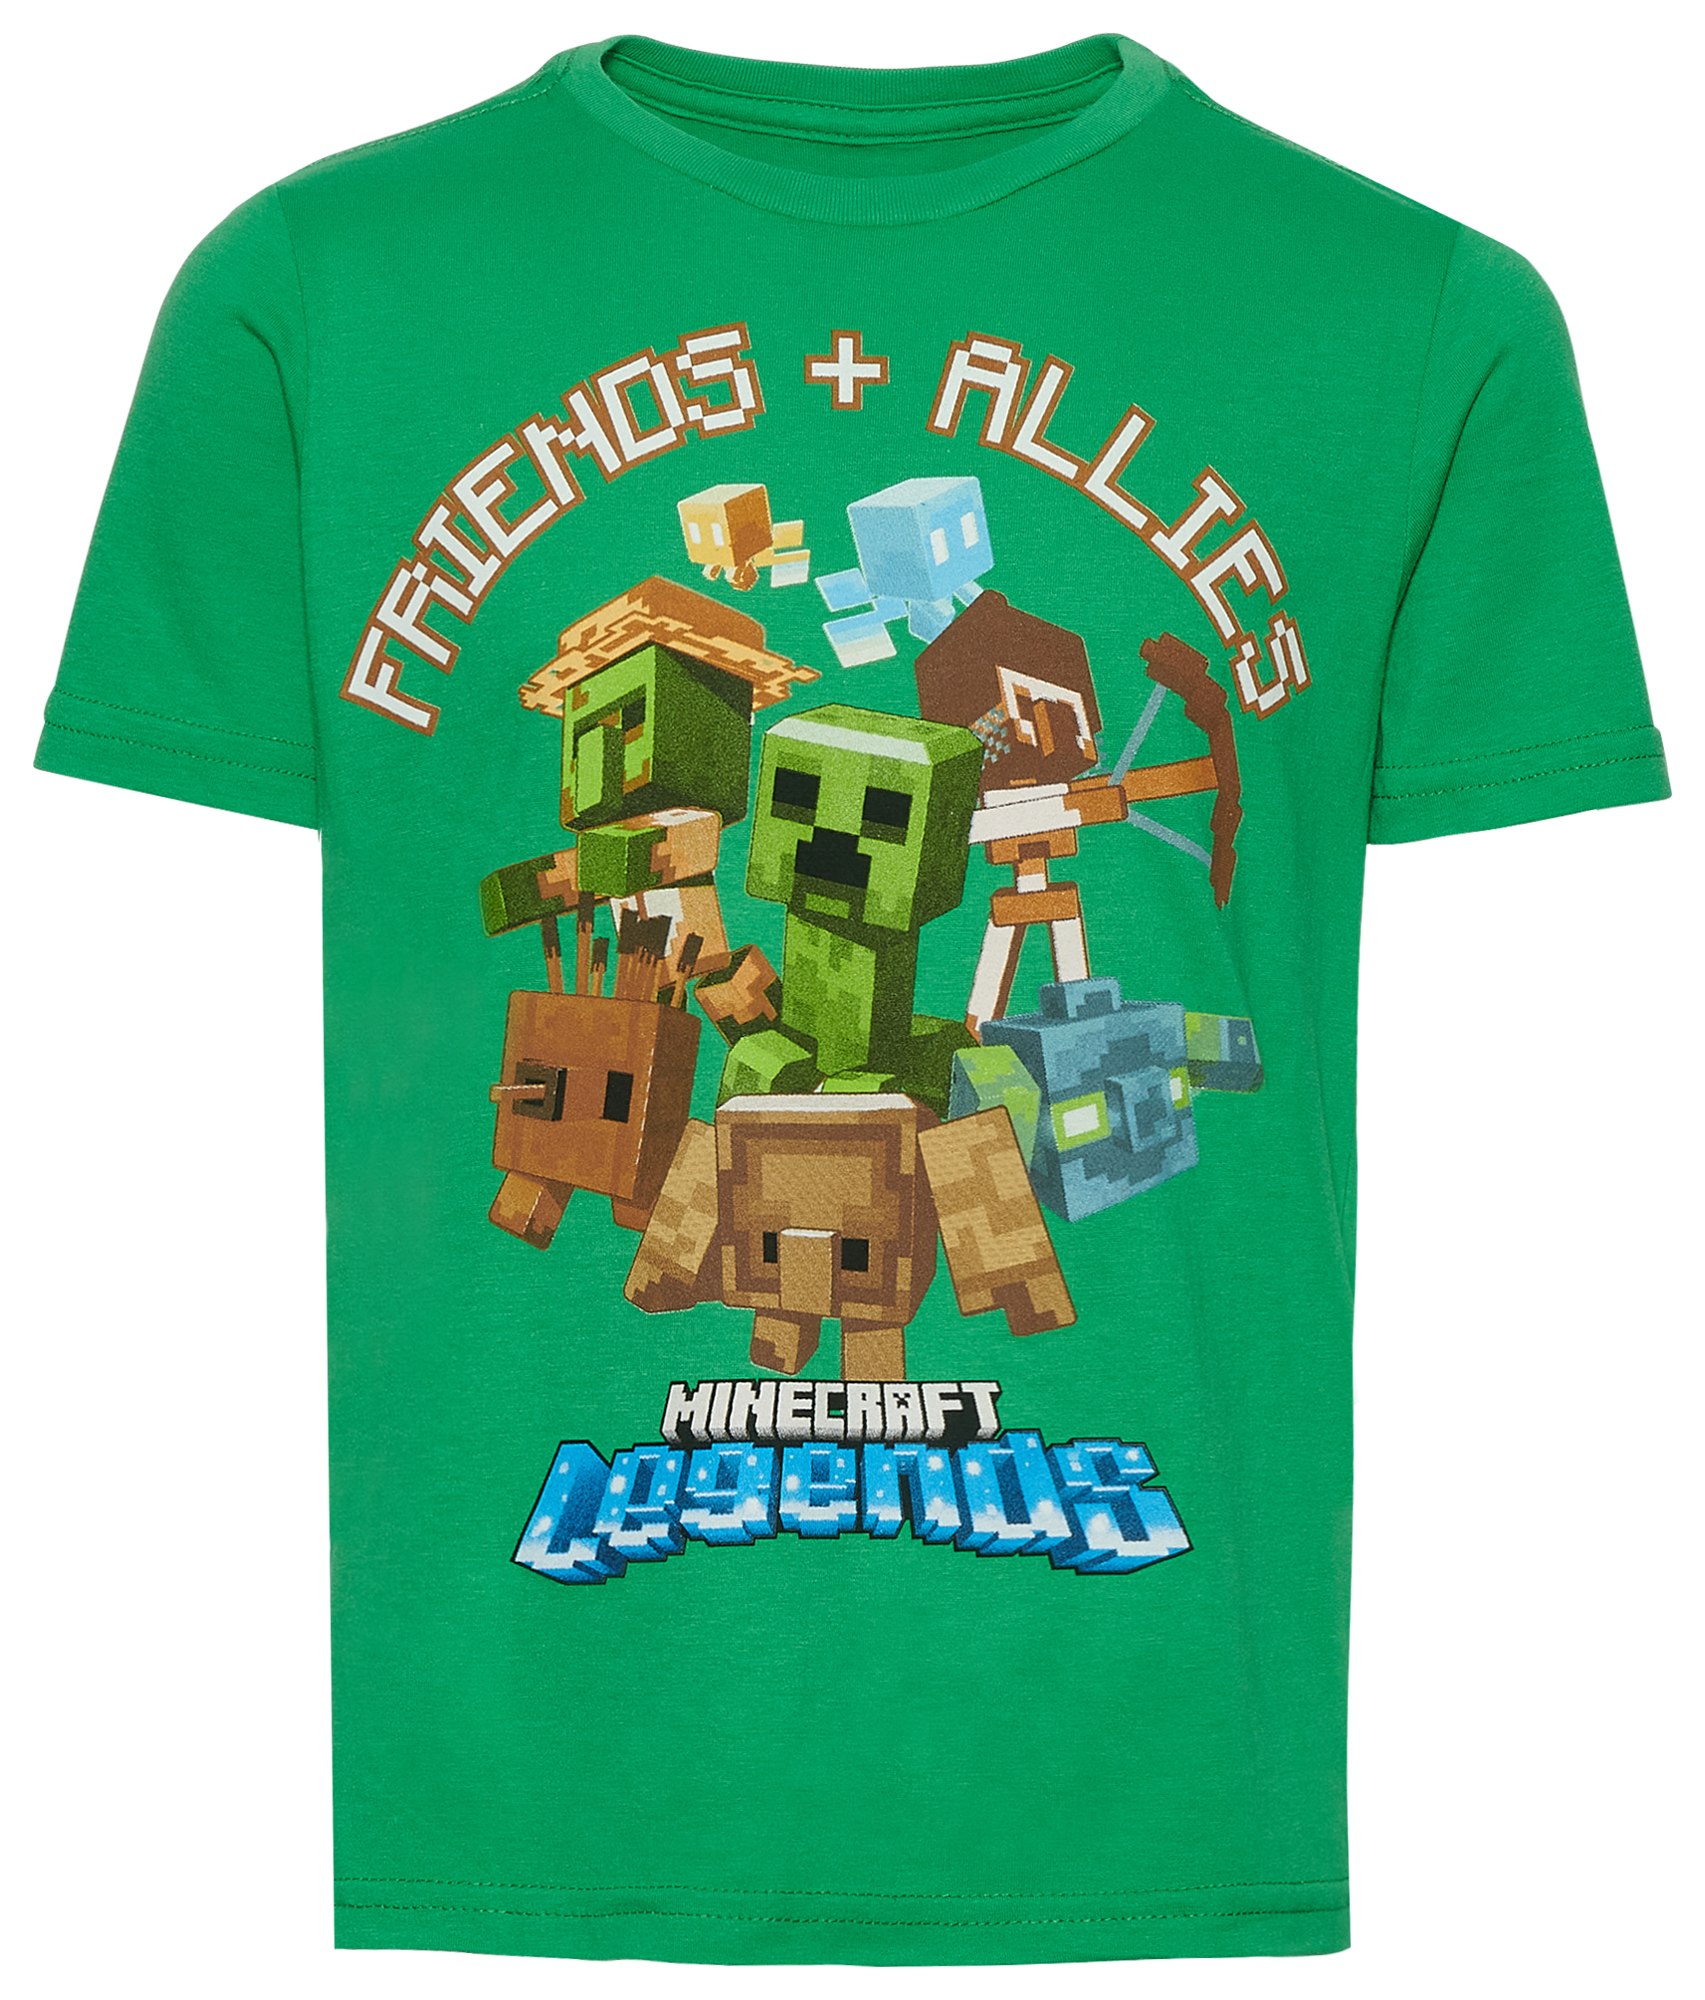 Minecraft MC Friends and Allies Culture T-Shirt - Boys' Grade School